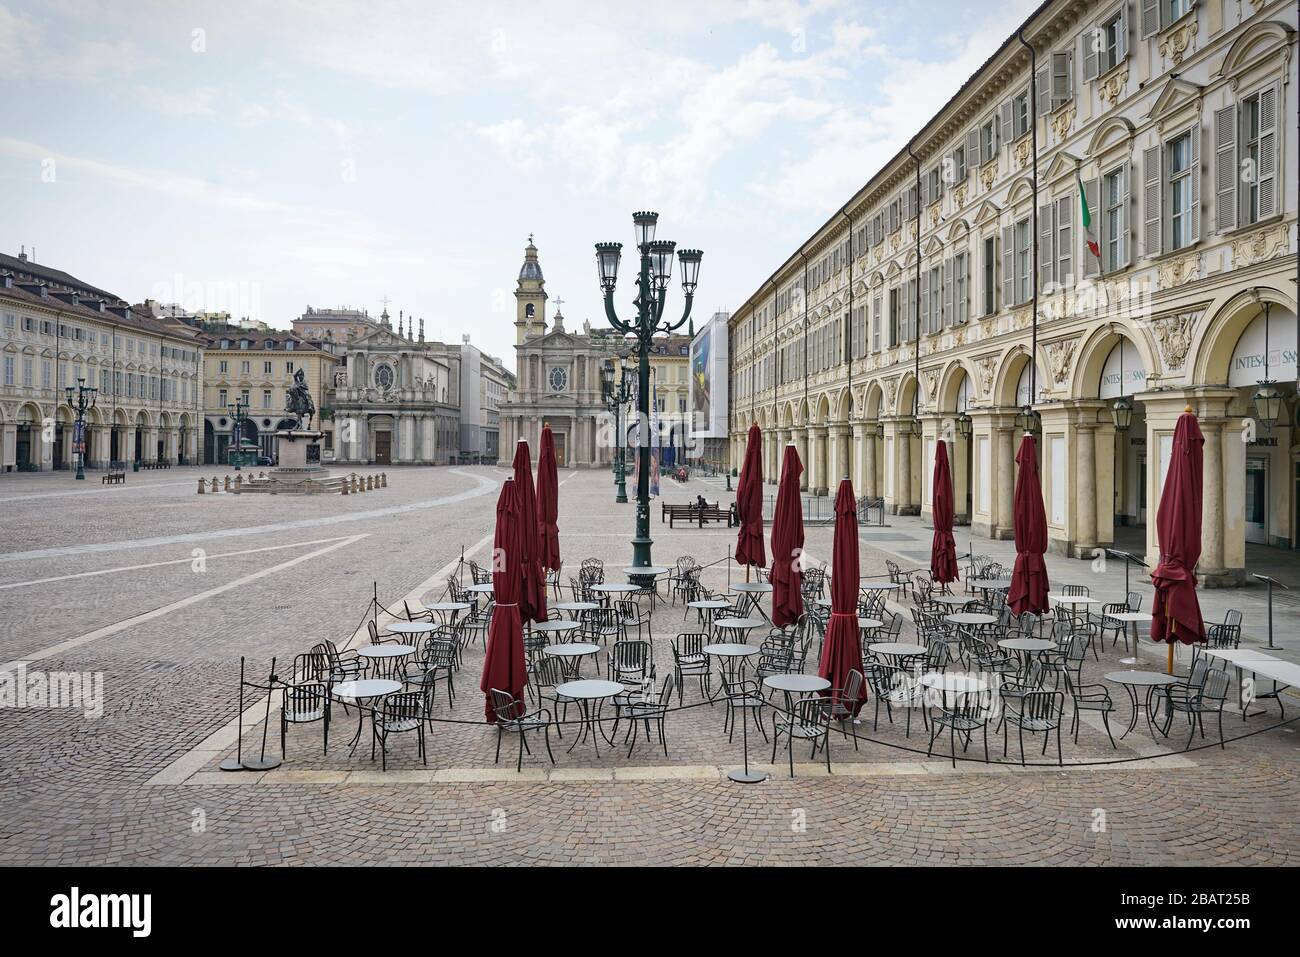 Coronavirus impact, empty downtown street Turin, Italy - March 2020 Stock Photo